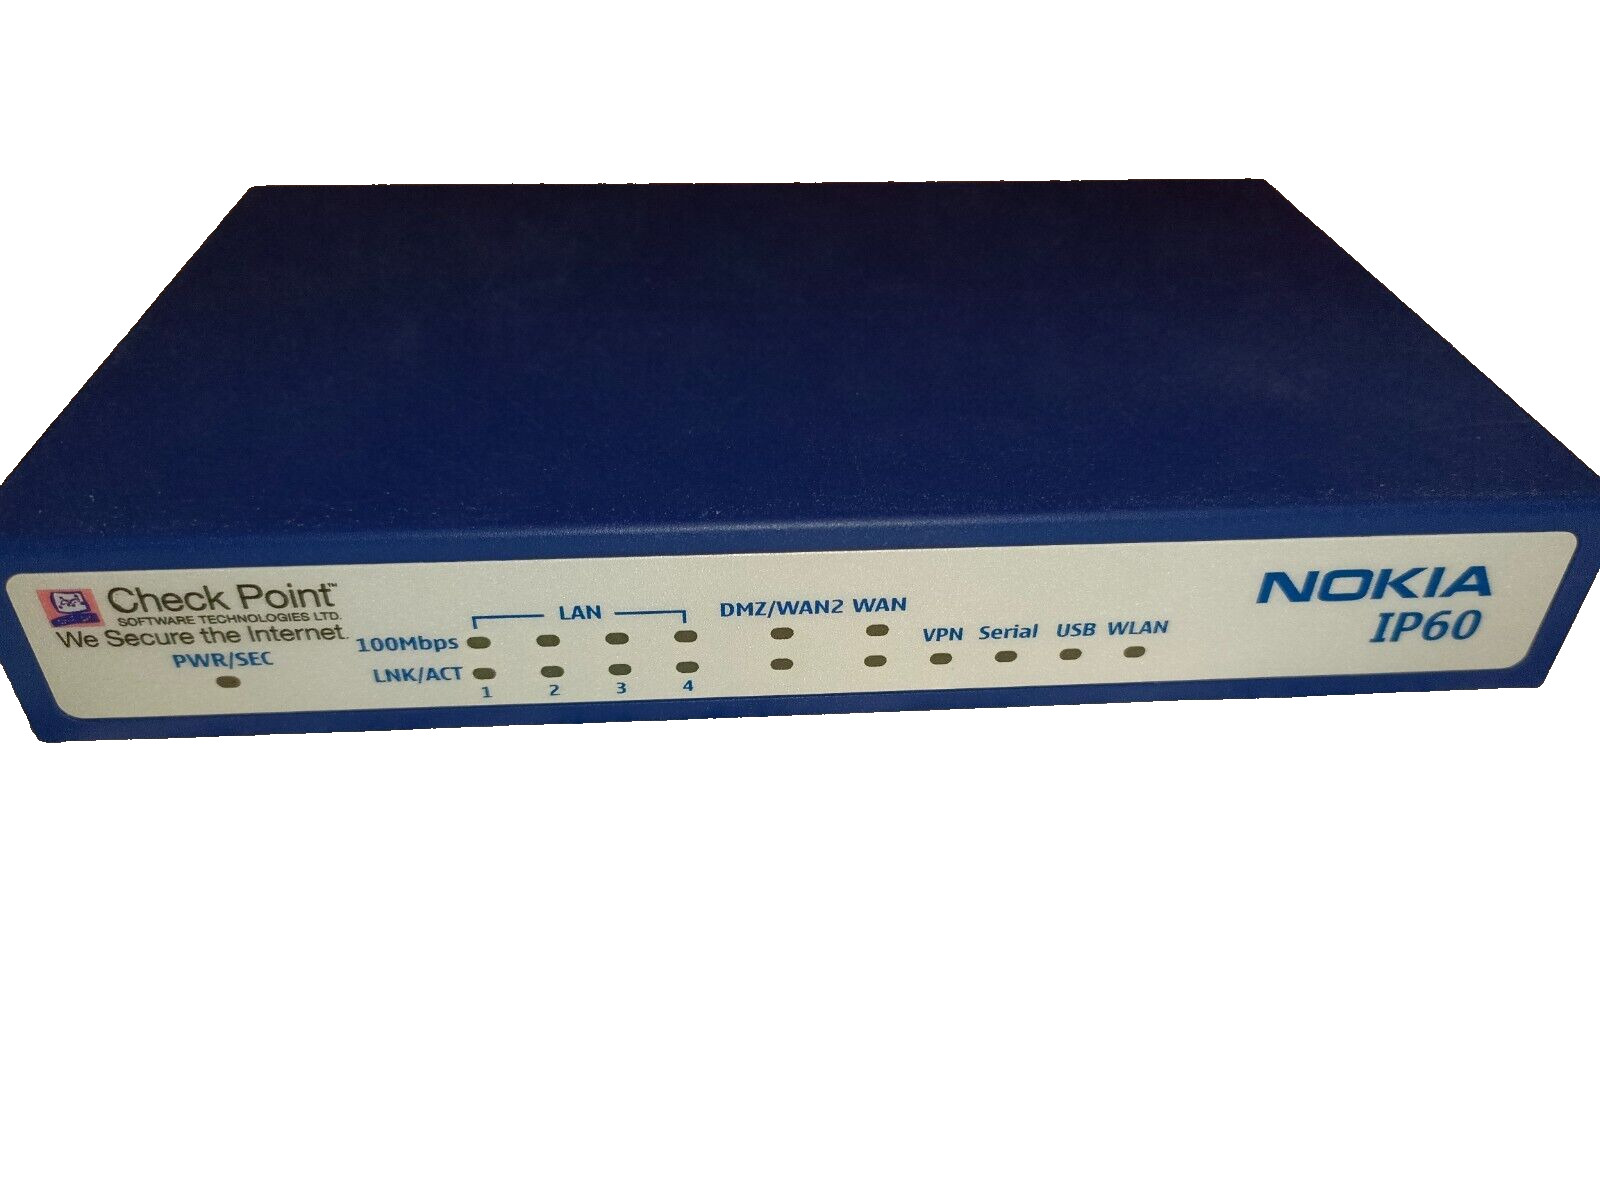 NOKIA IP60 w/Wireless Router